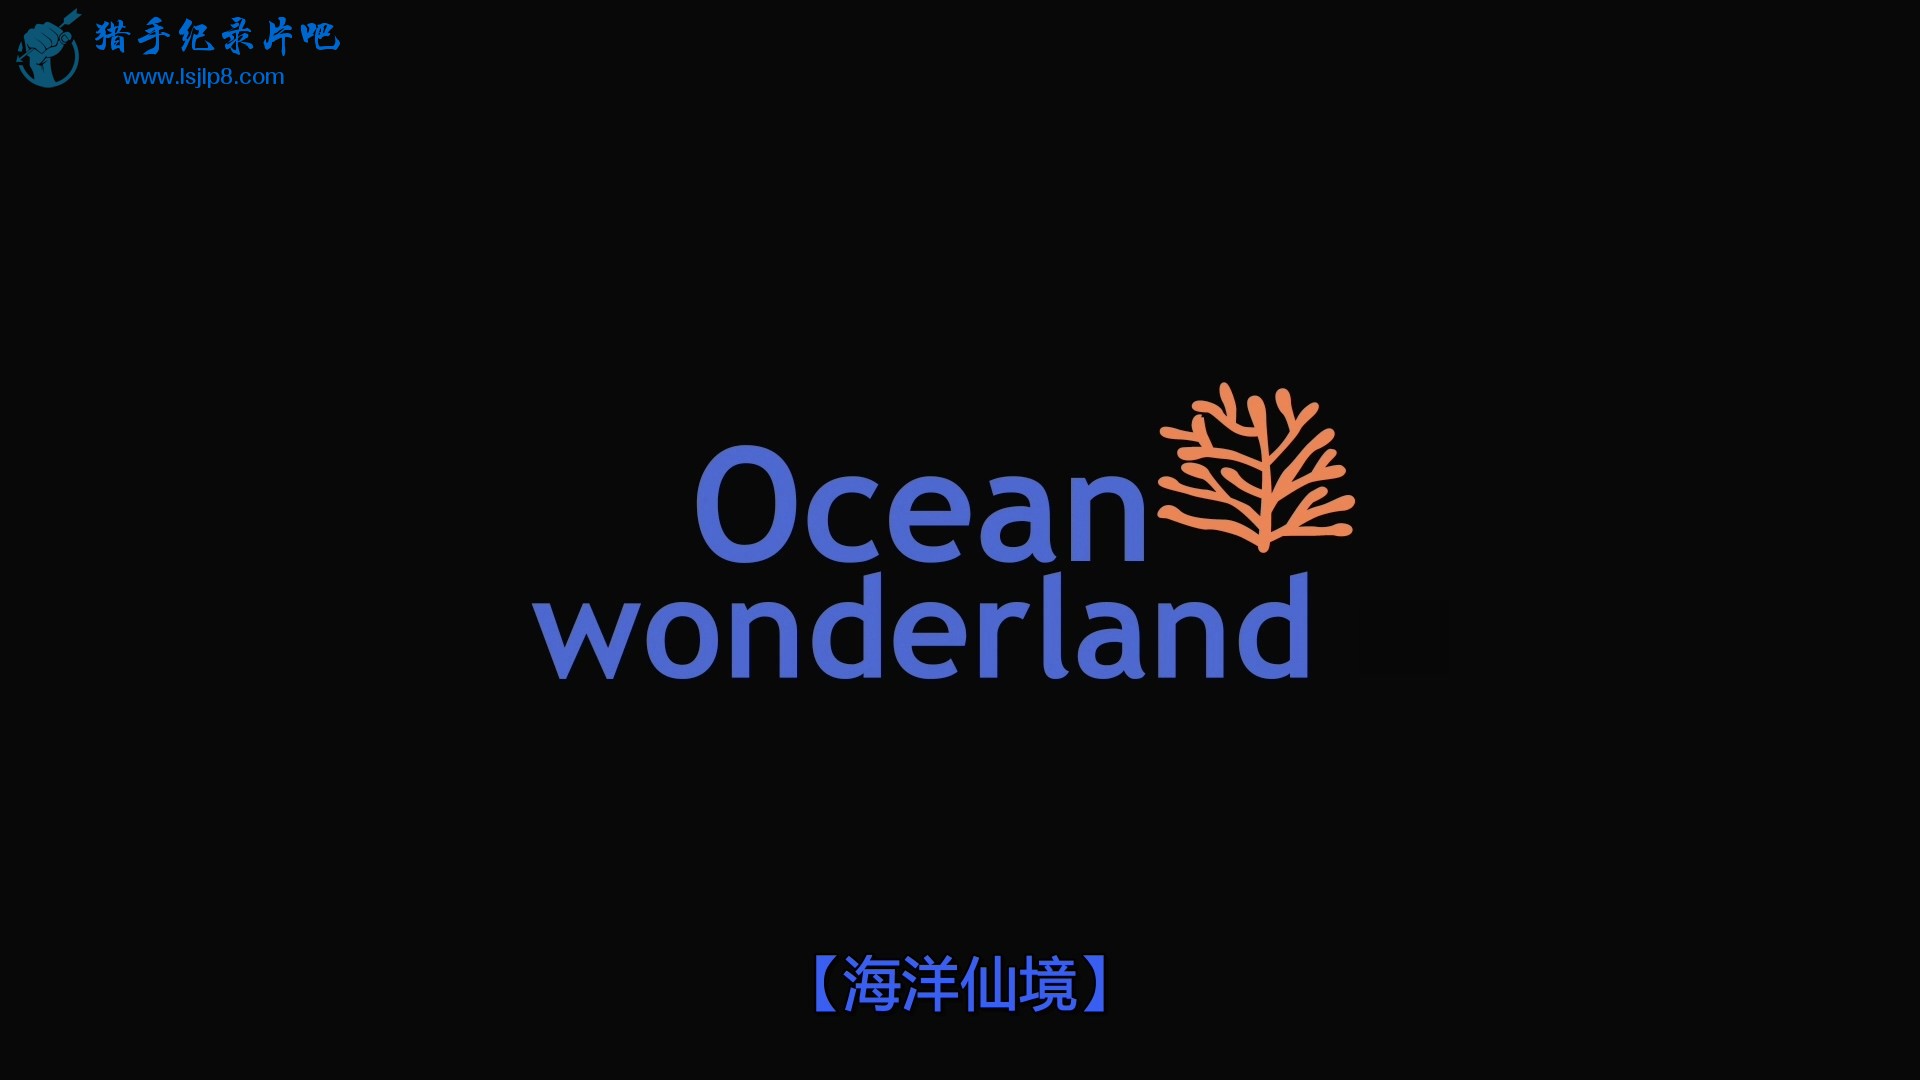 IMAX.Ocean.Wonderland.2003.1080p.BluRay.x264-DON.mkv_20200426_105742.673.jpg